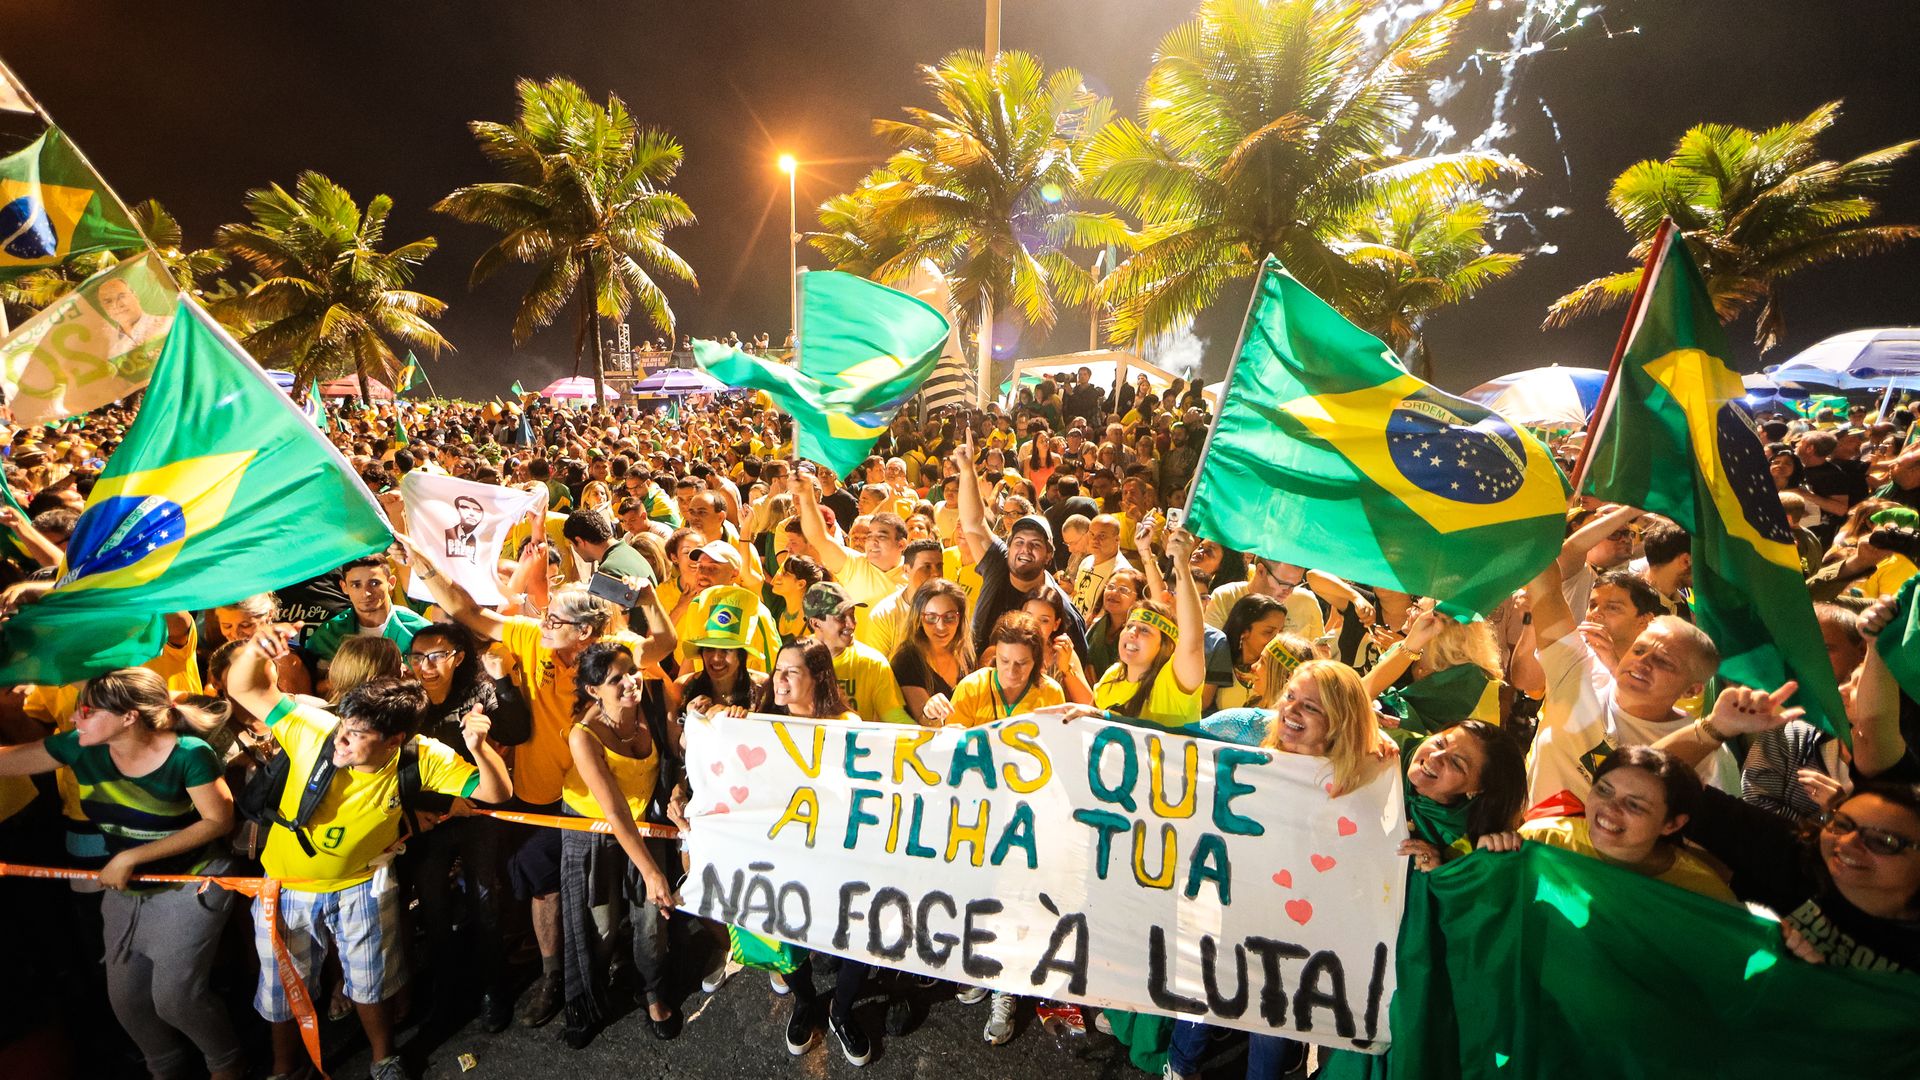 Jair Bolsonaro supporters celebrate